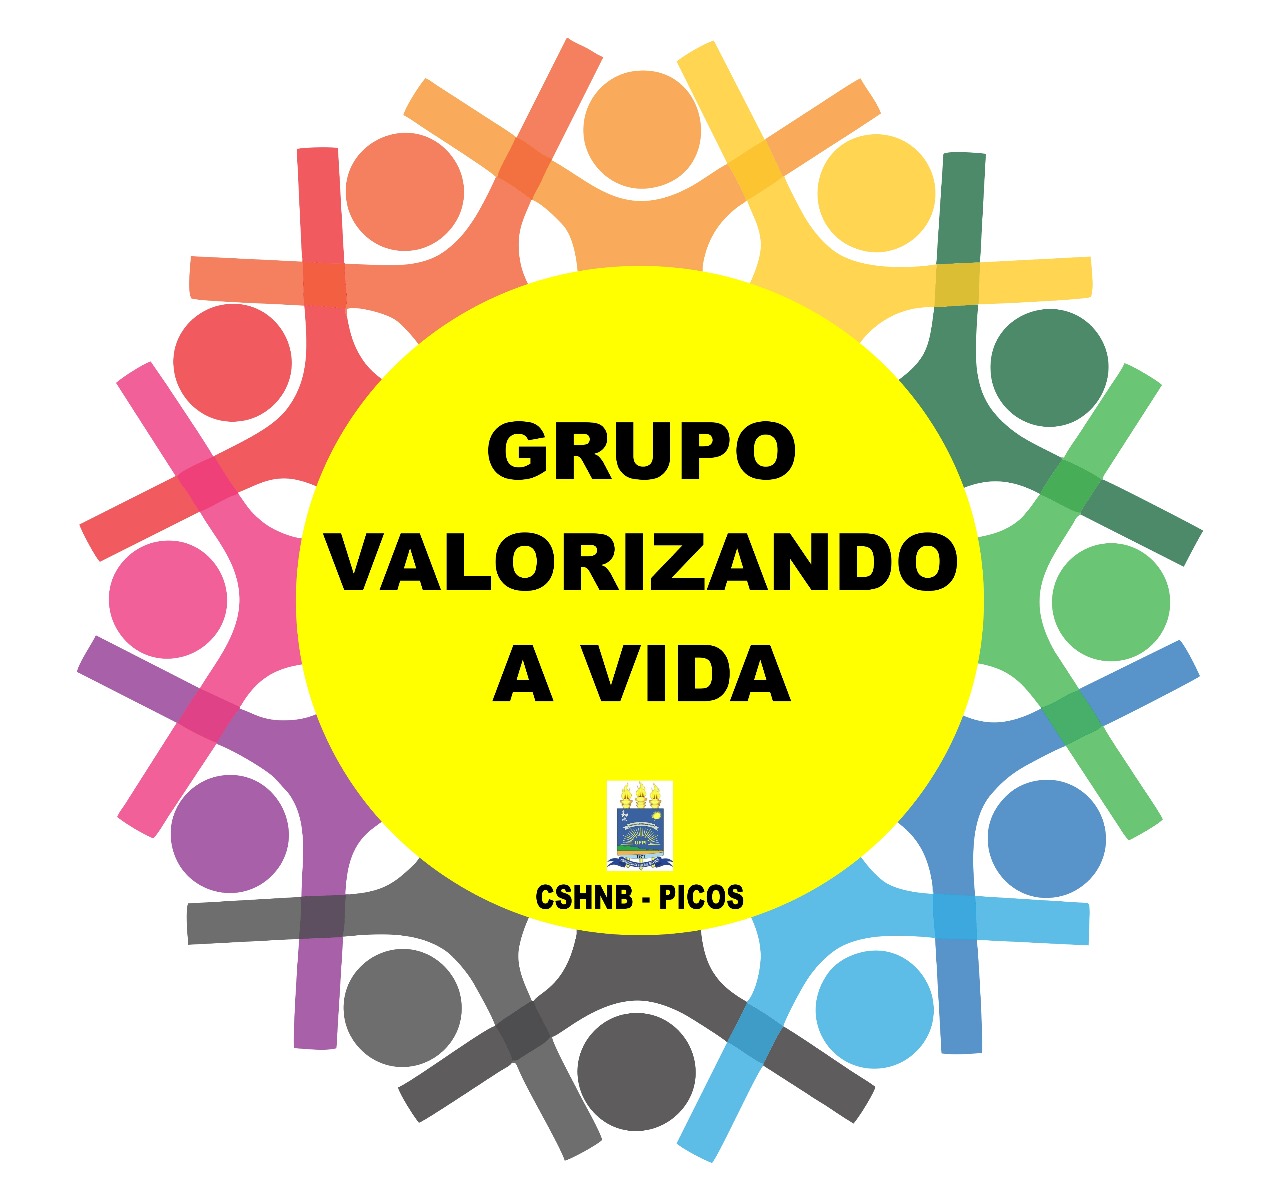 Grupo Valorizando a Vida20181120115700